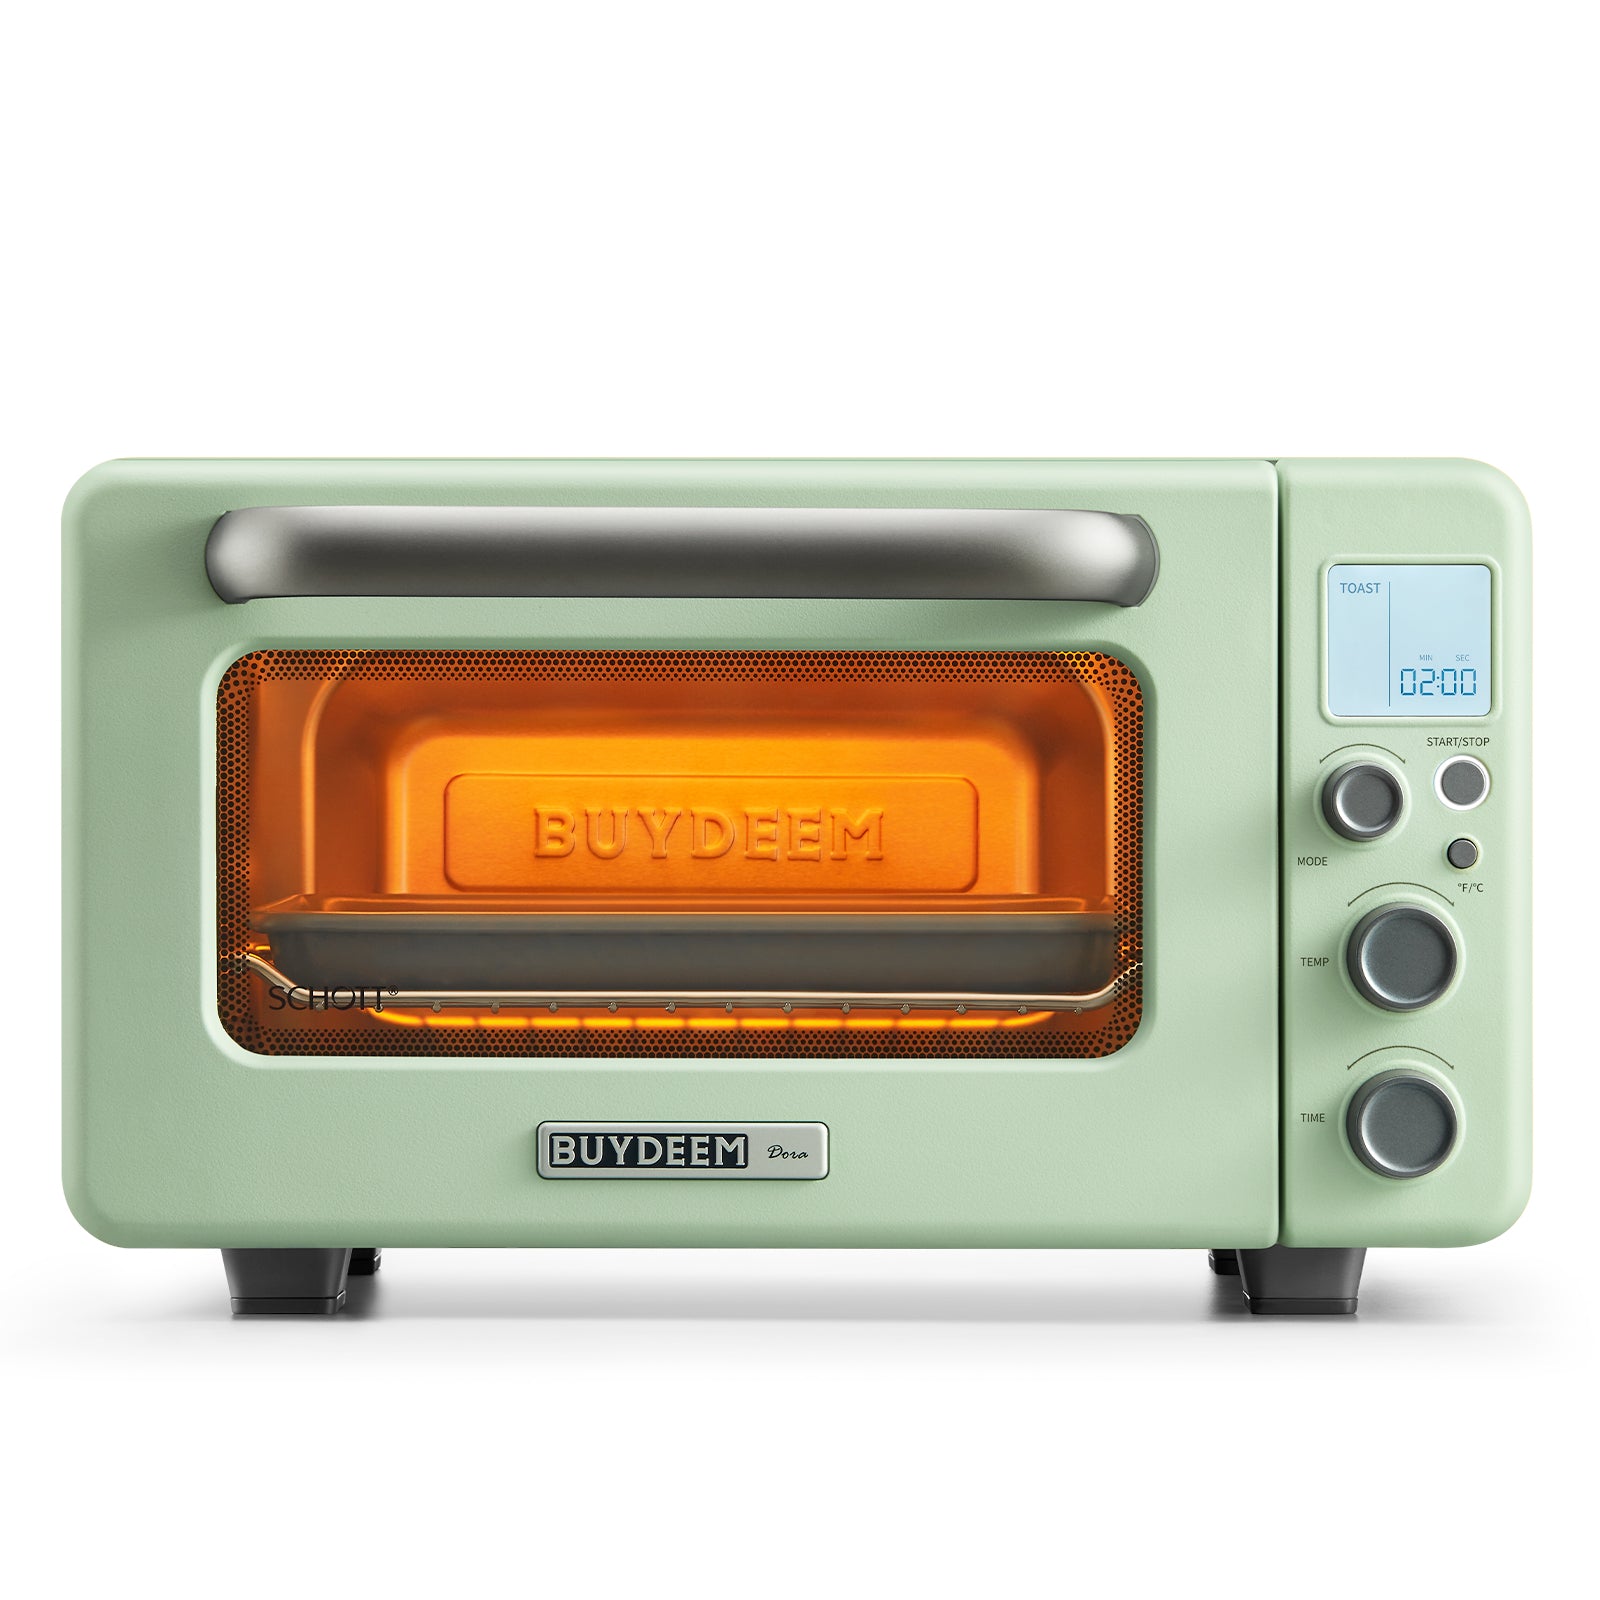 Mini Toaster Oven, Multi-functional Oven 12 QT